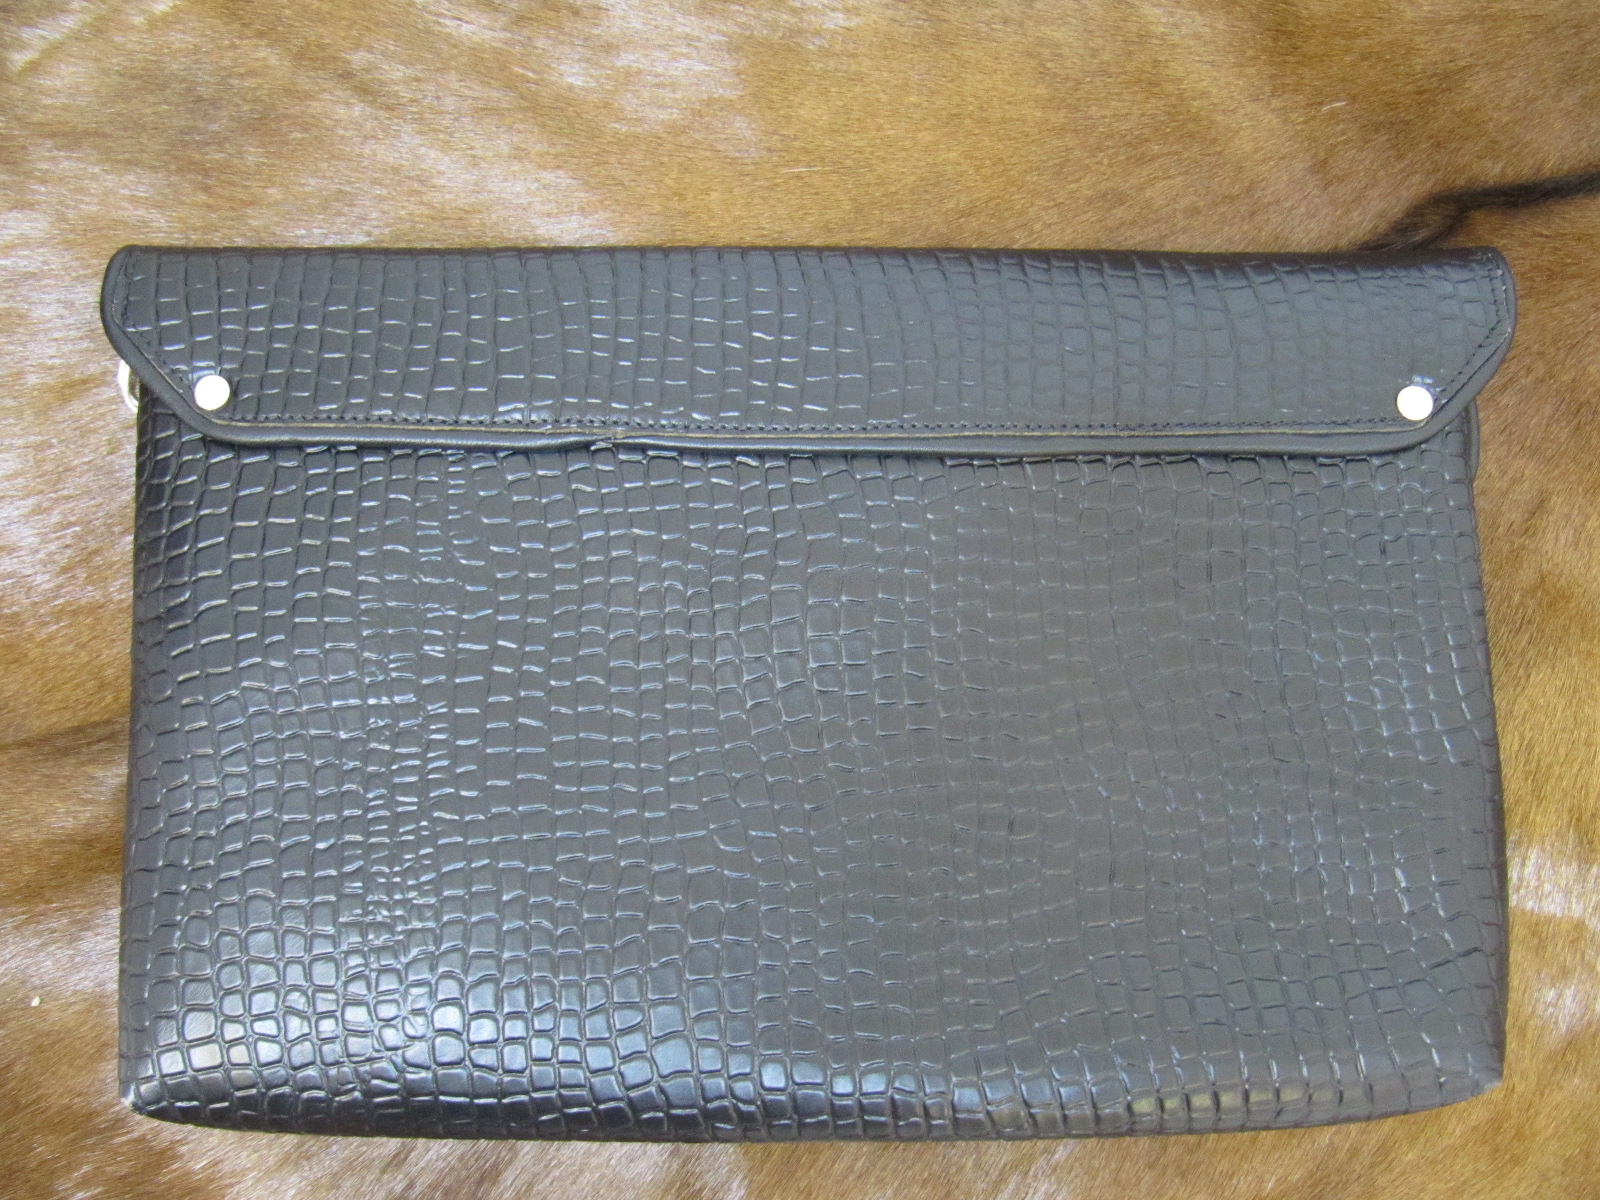 Black leather (mock croc) clutch bag